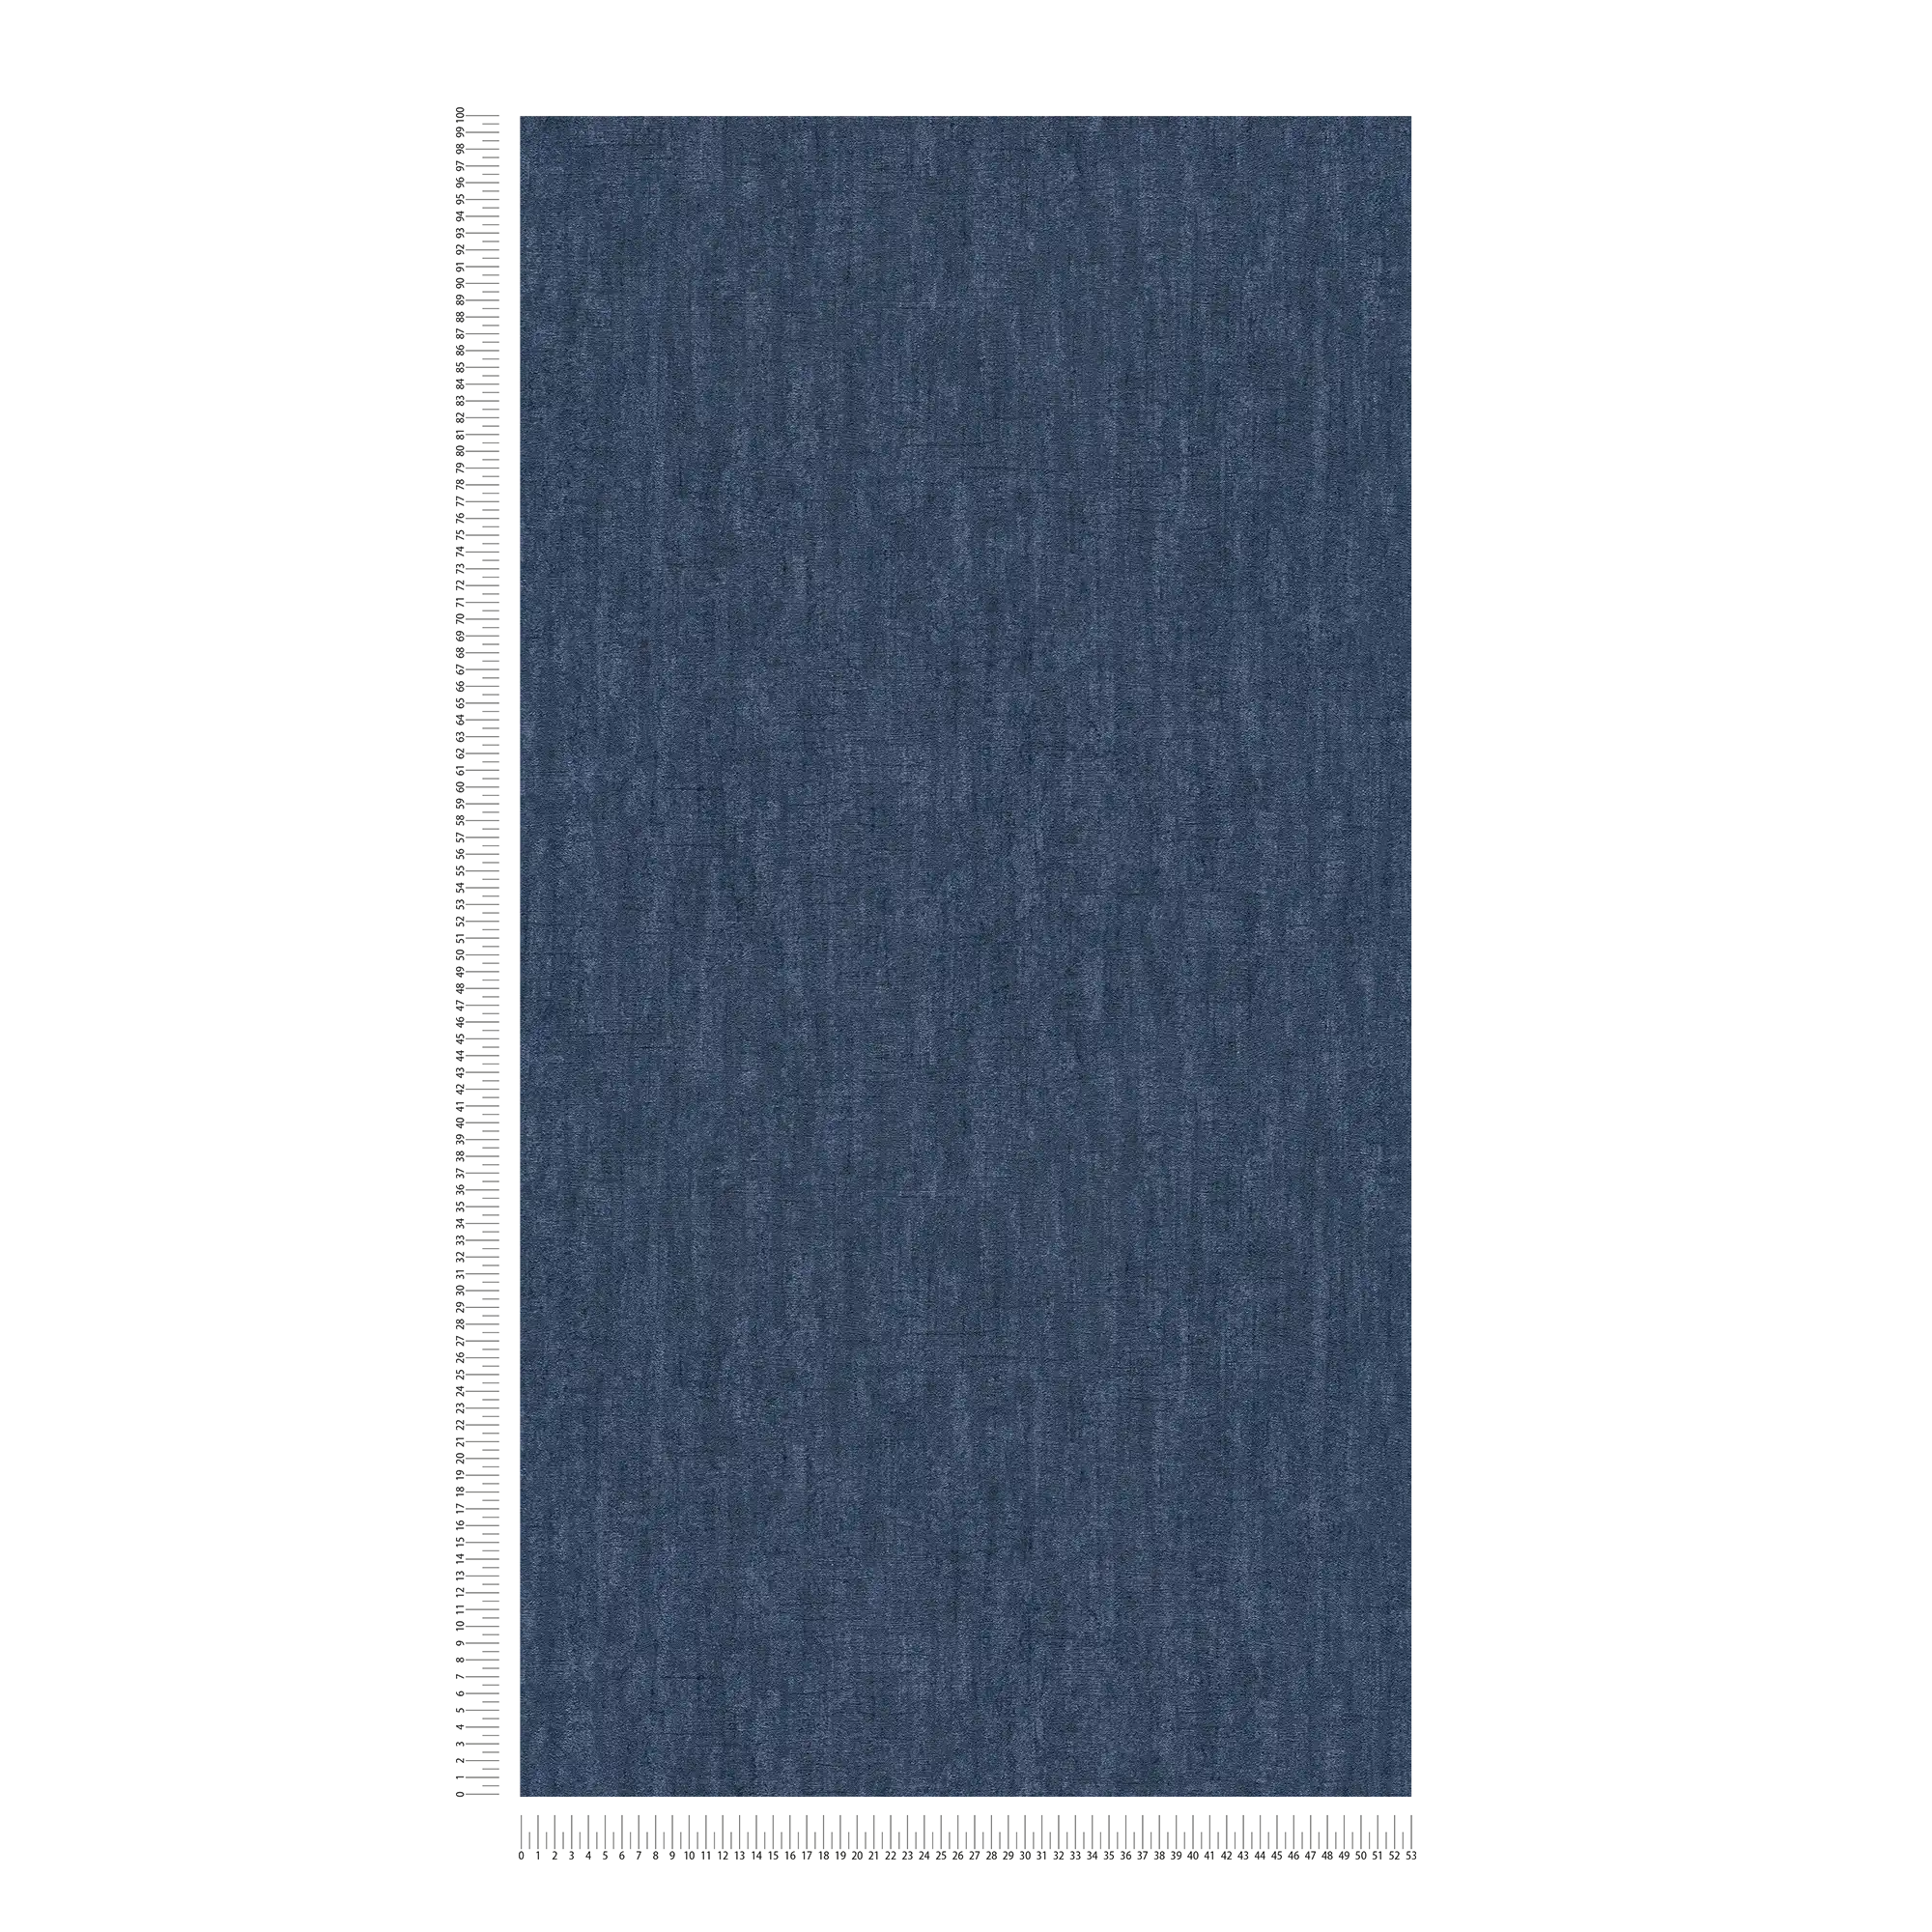             papel pintado azul oscuro moteado, con estructura y efecto brillante - azul
        